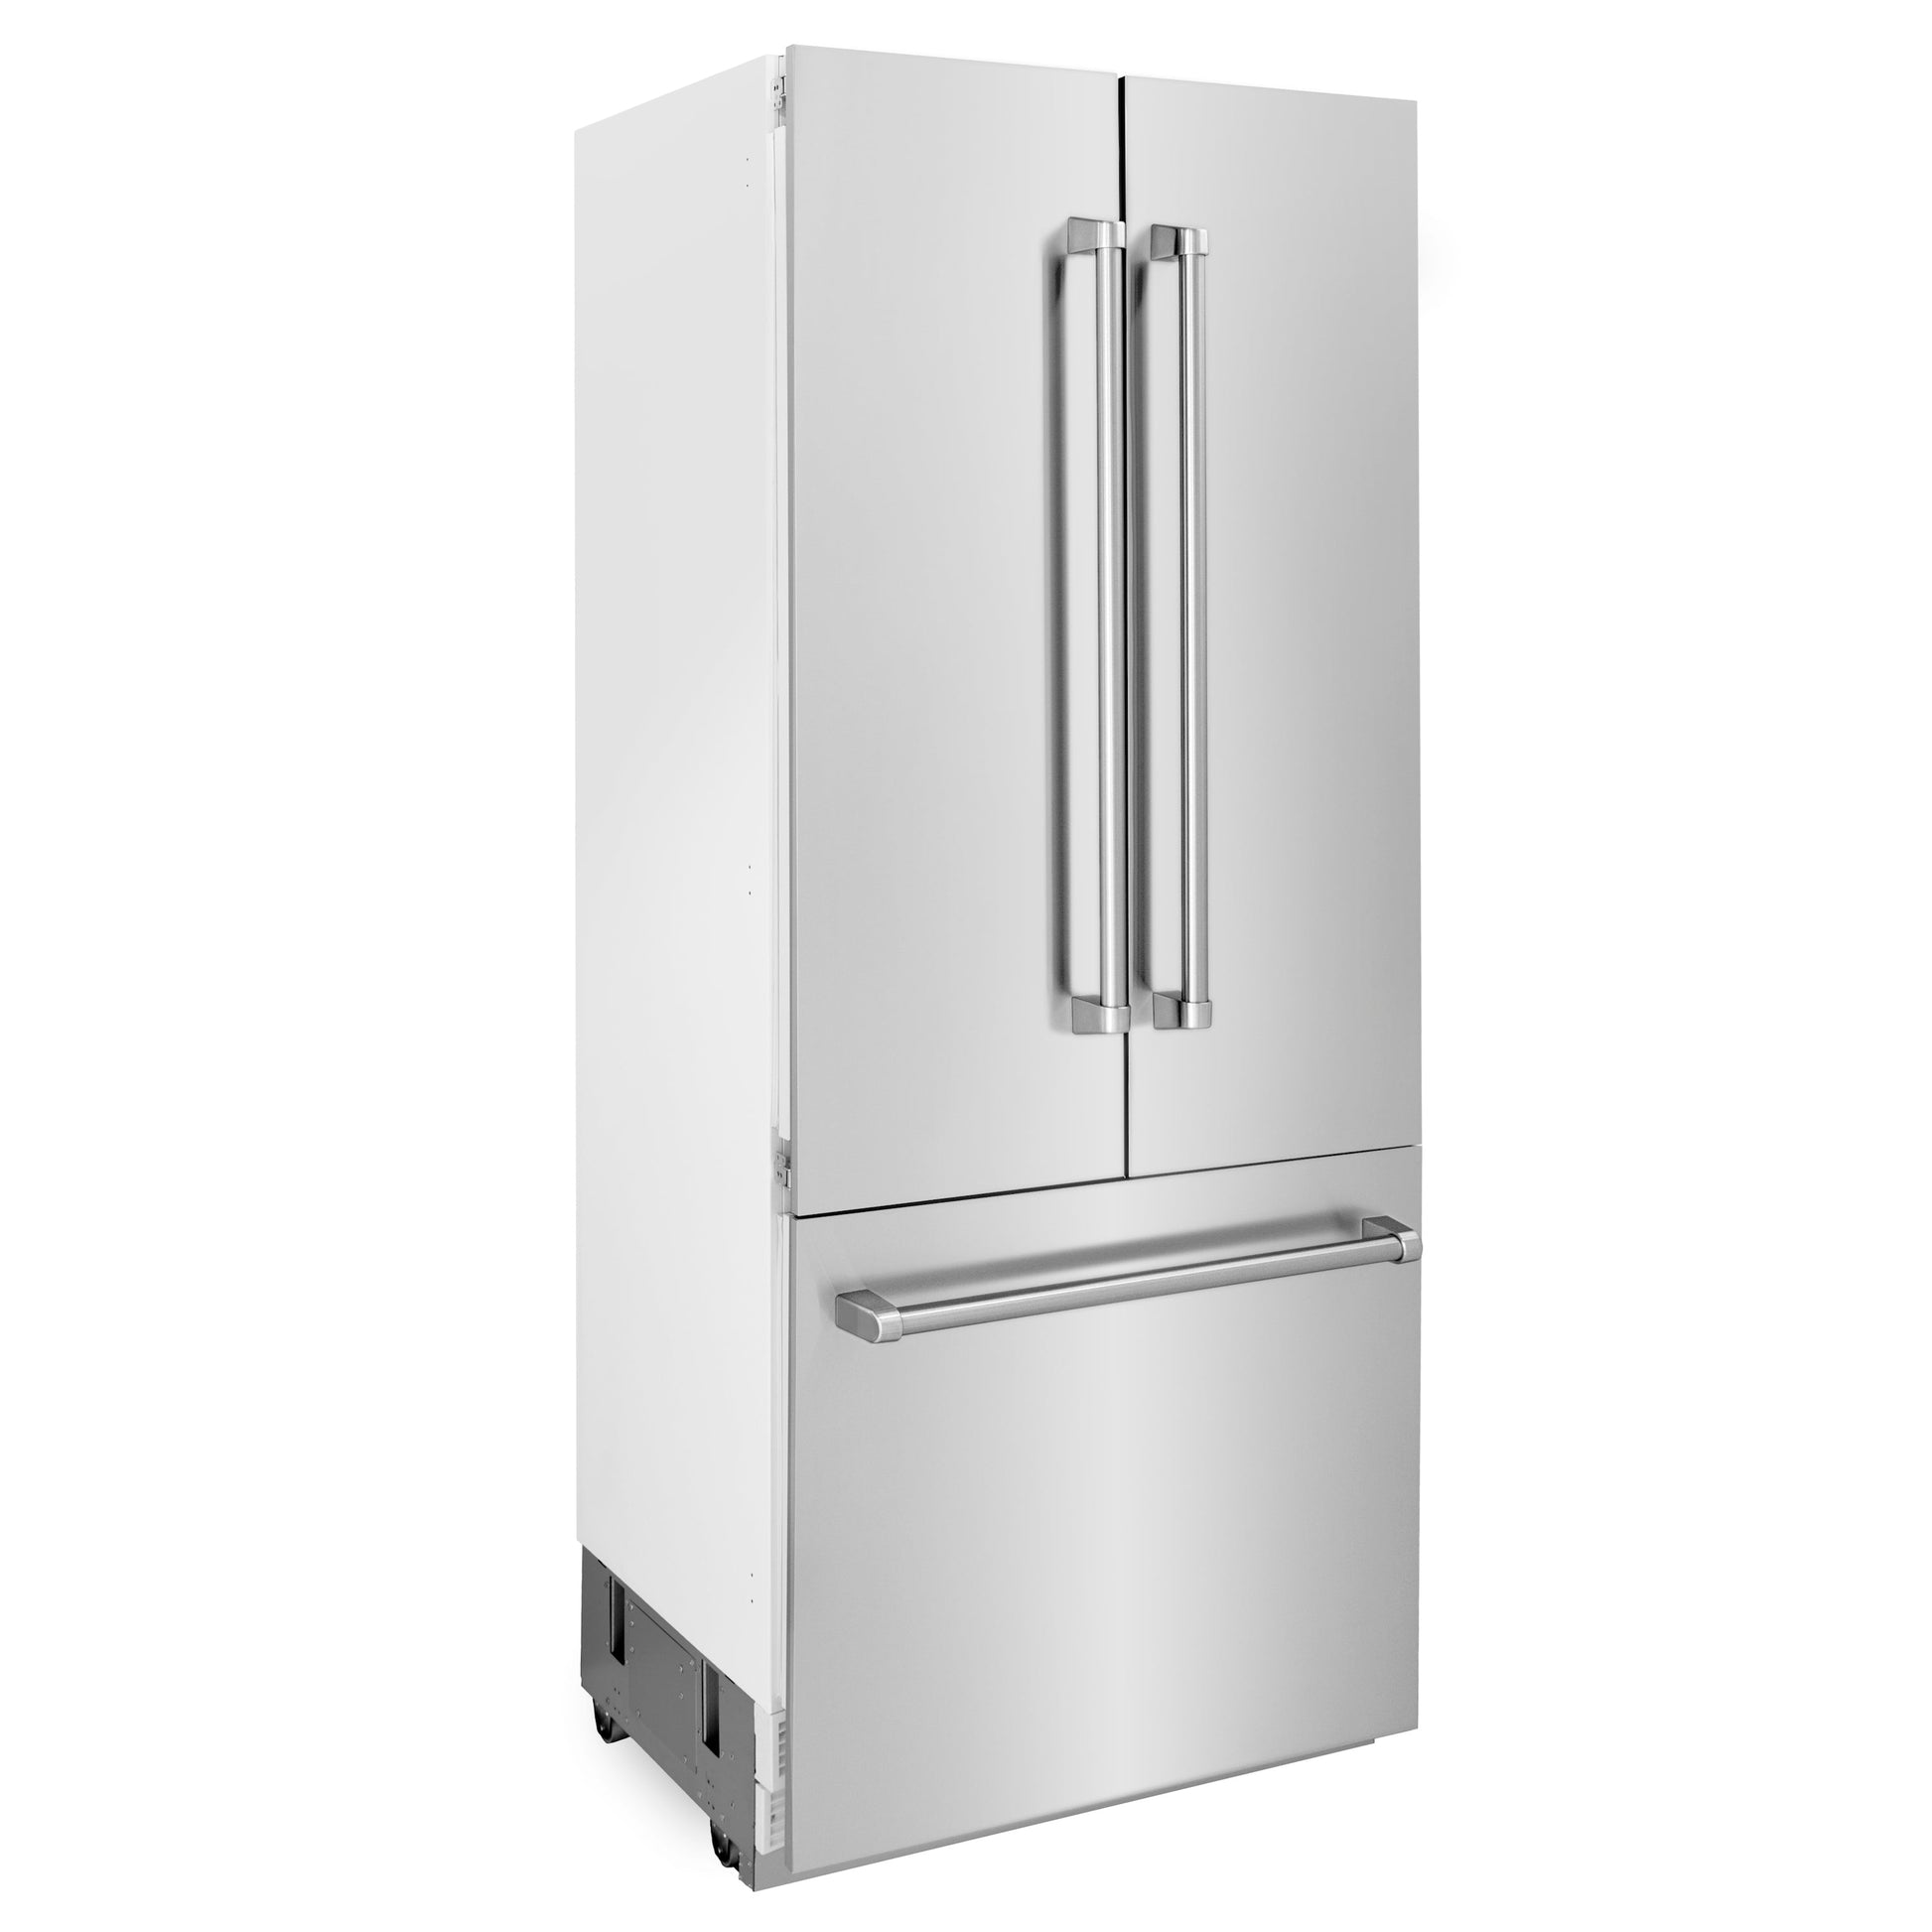 ZLINE 36 in. 19.6 cu. ft. Built-In 3-Door French Door Refrigerator with Internal Water and Ice Dispenser in Stainless Steel (RBIV-304-36) side, doors closed.